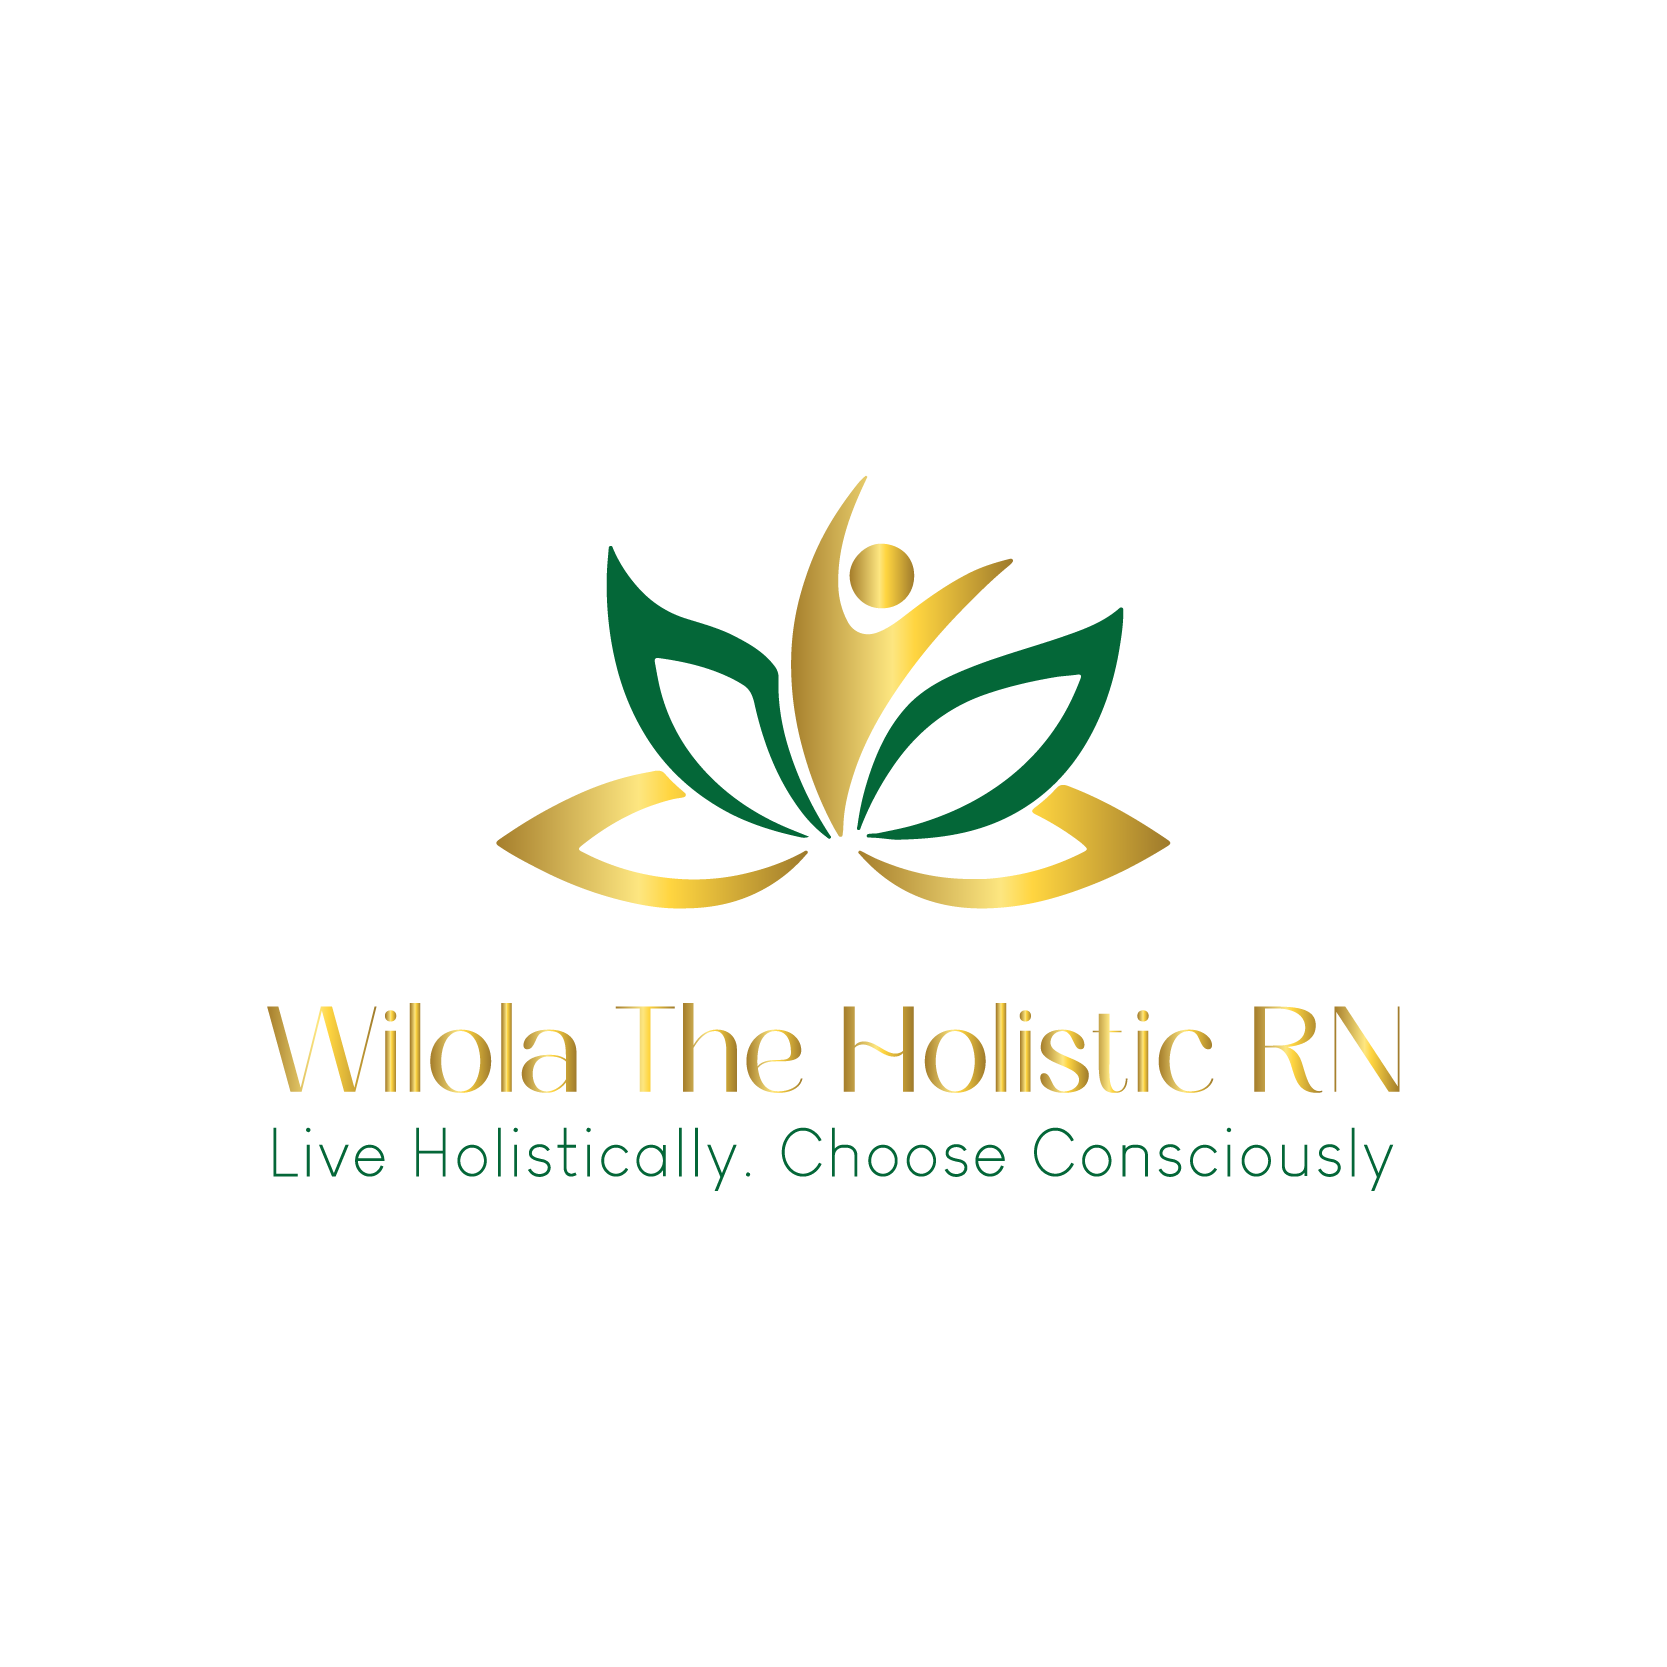 The Holistic RN